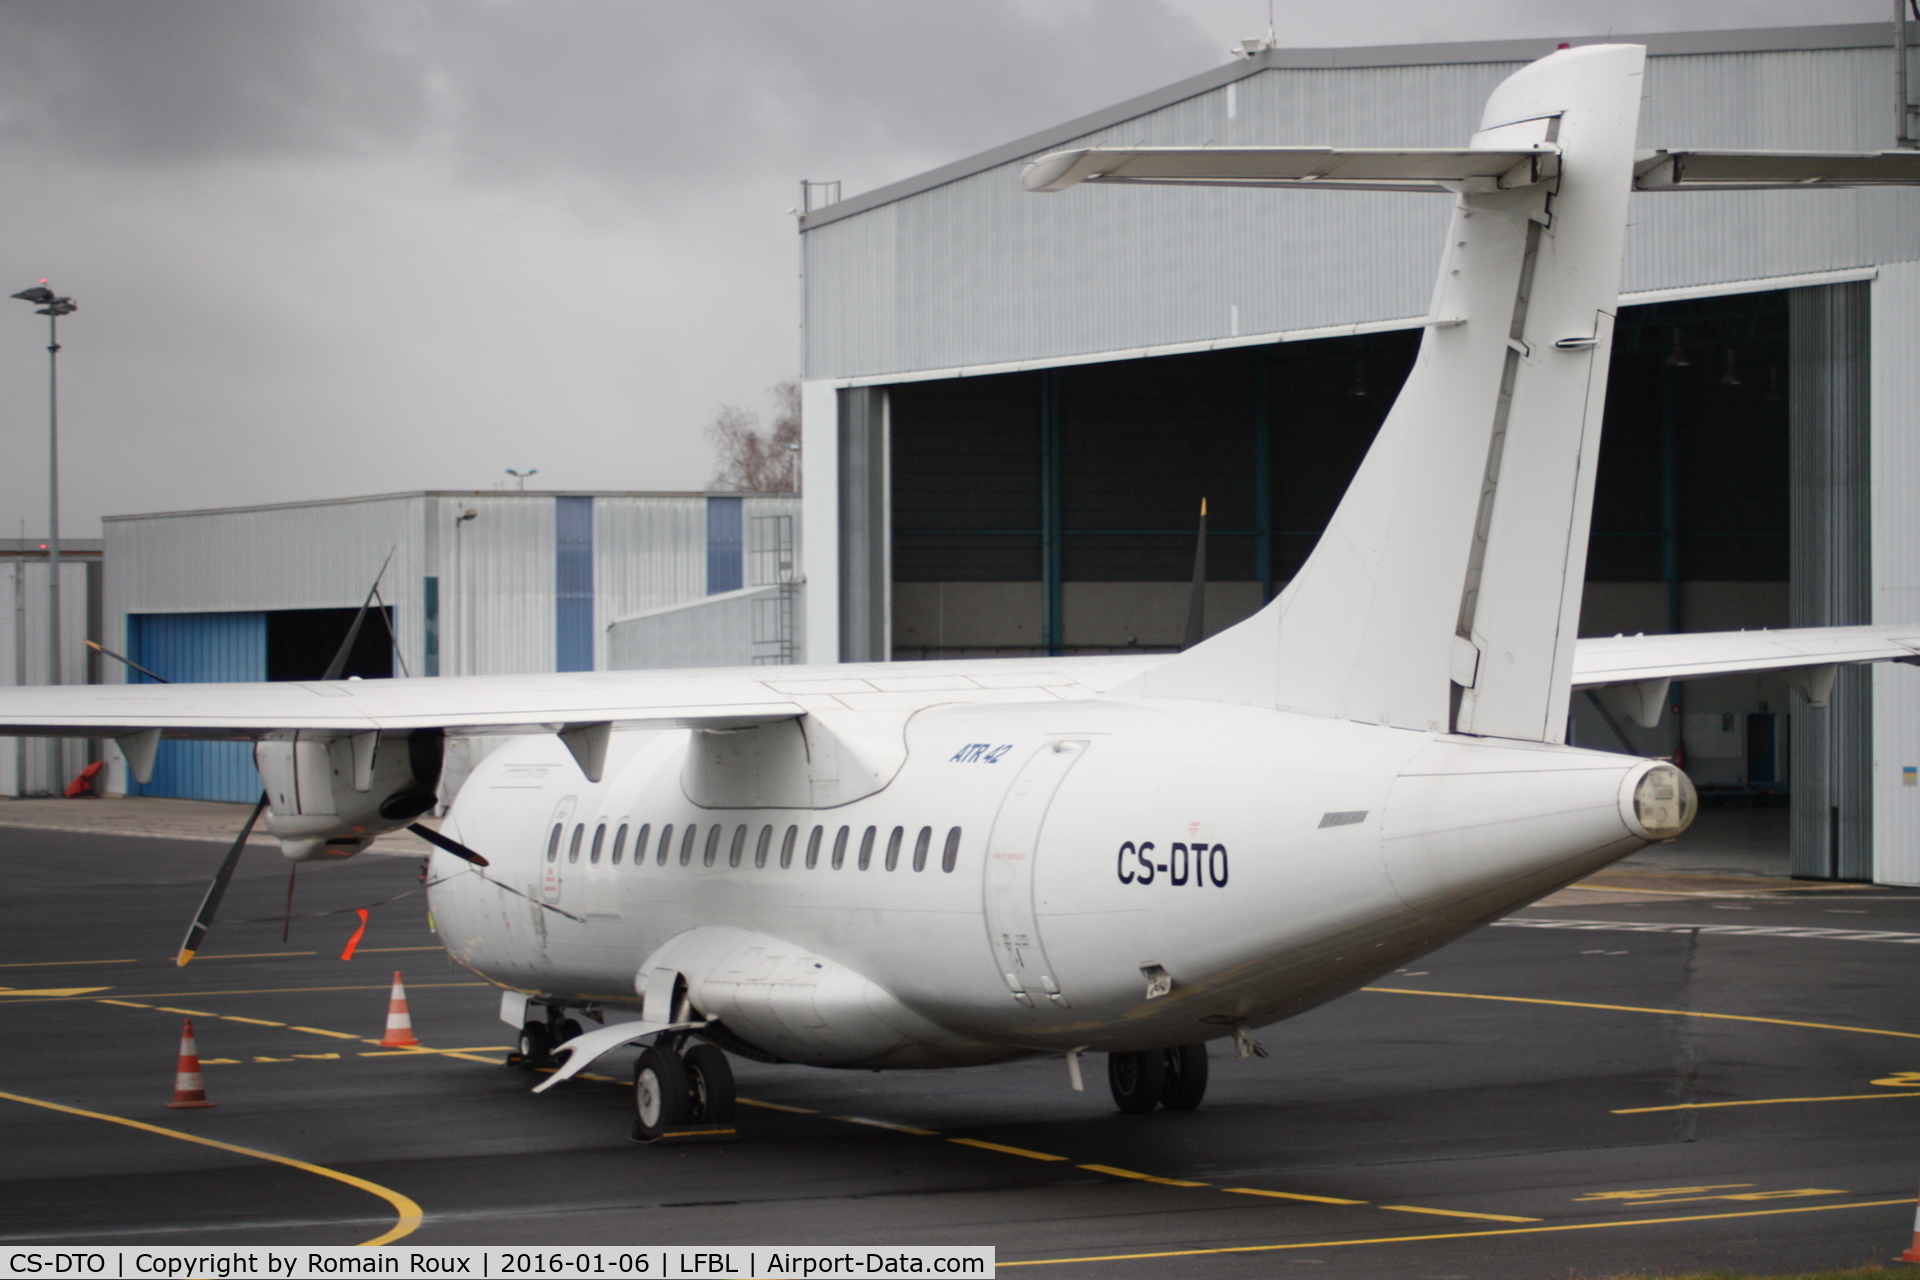 CS-DTO, 1988 ATR 42-300 C/N 095, Parked